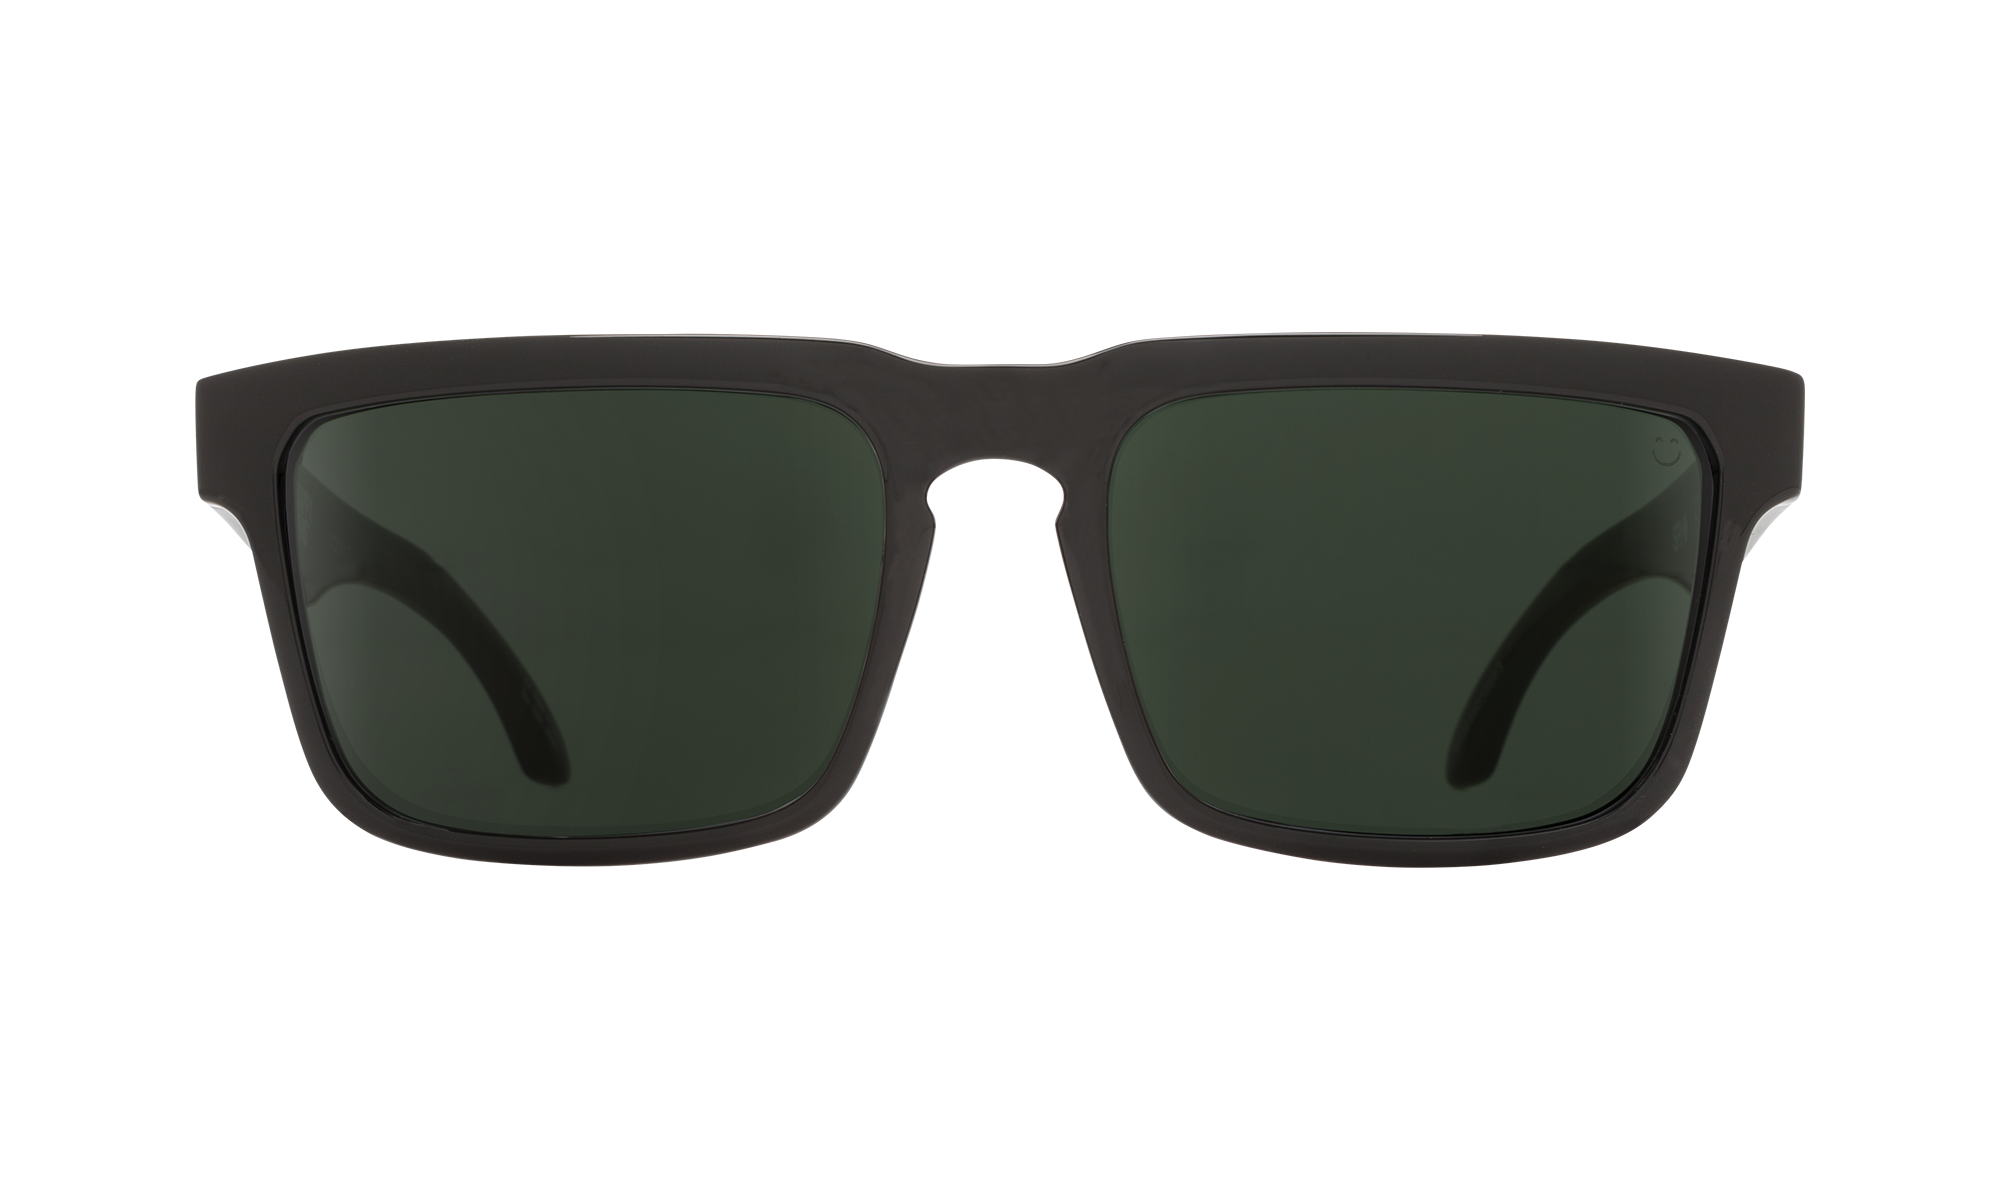 stock image of sunglasses